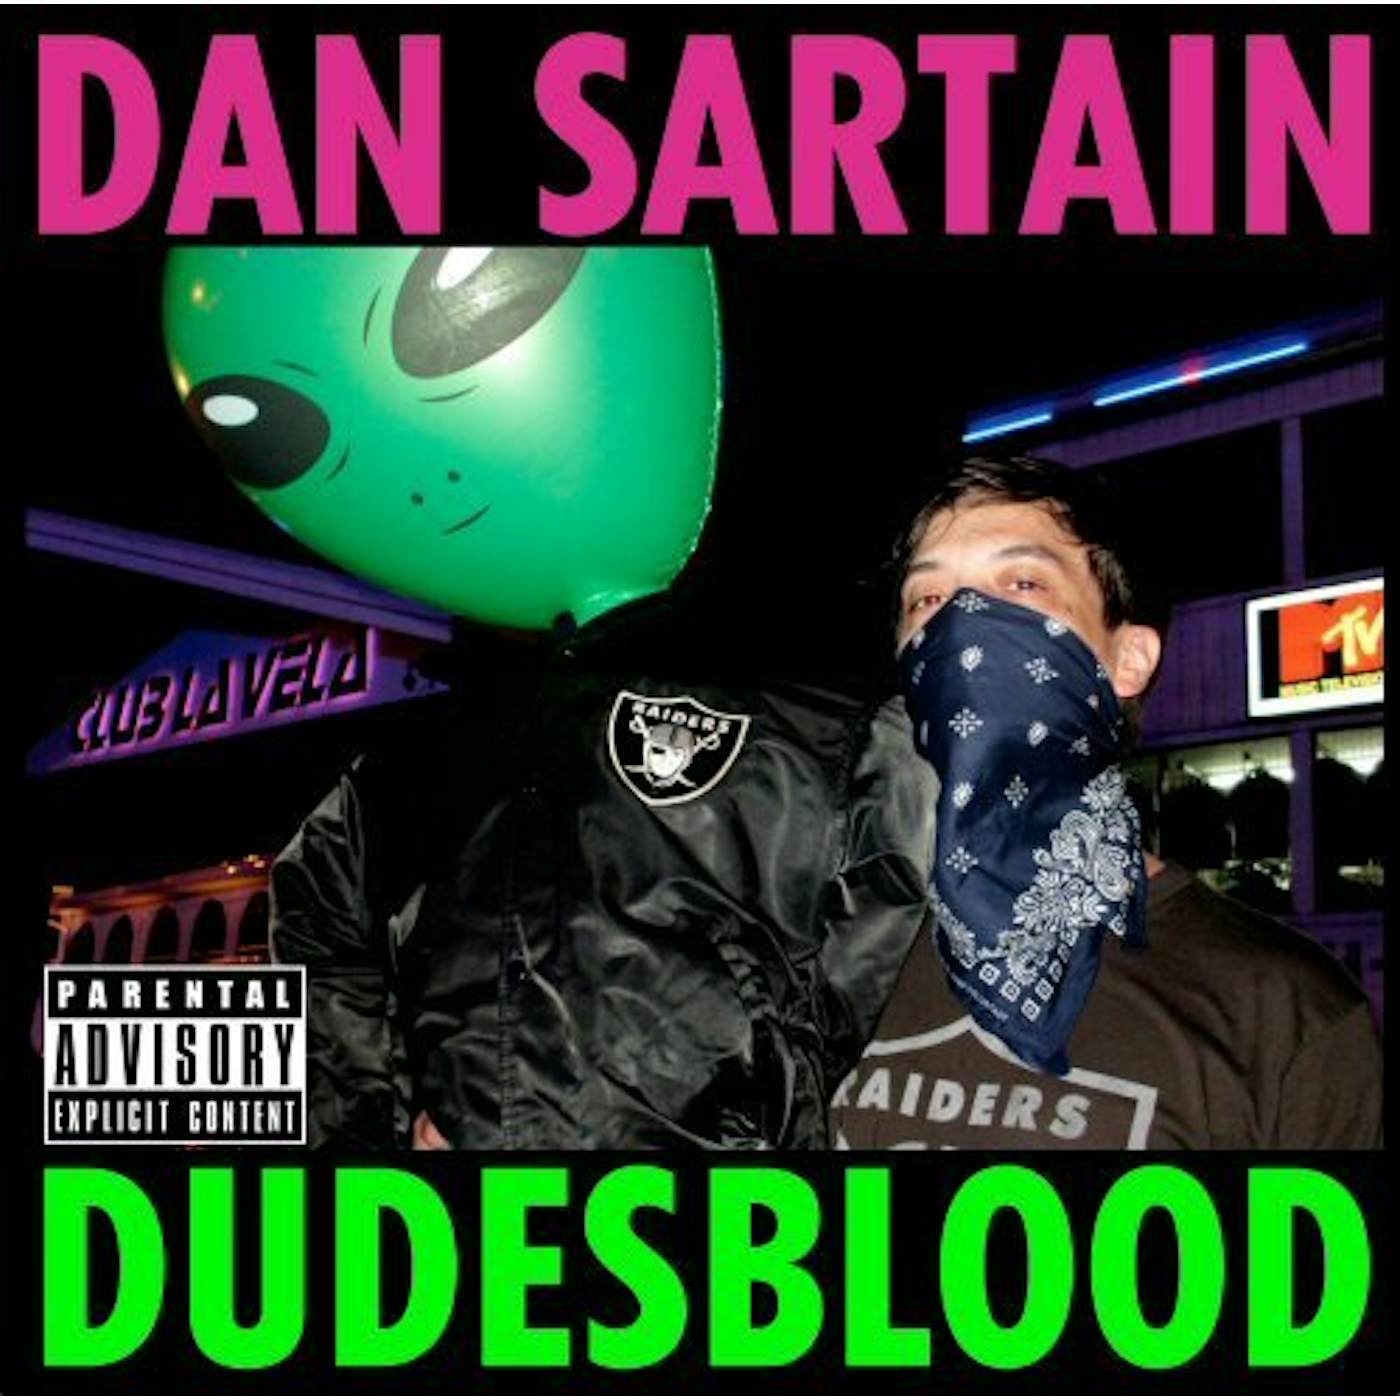 Dan Sartain DUDESBLOOD CD